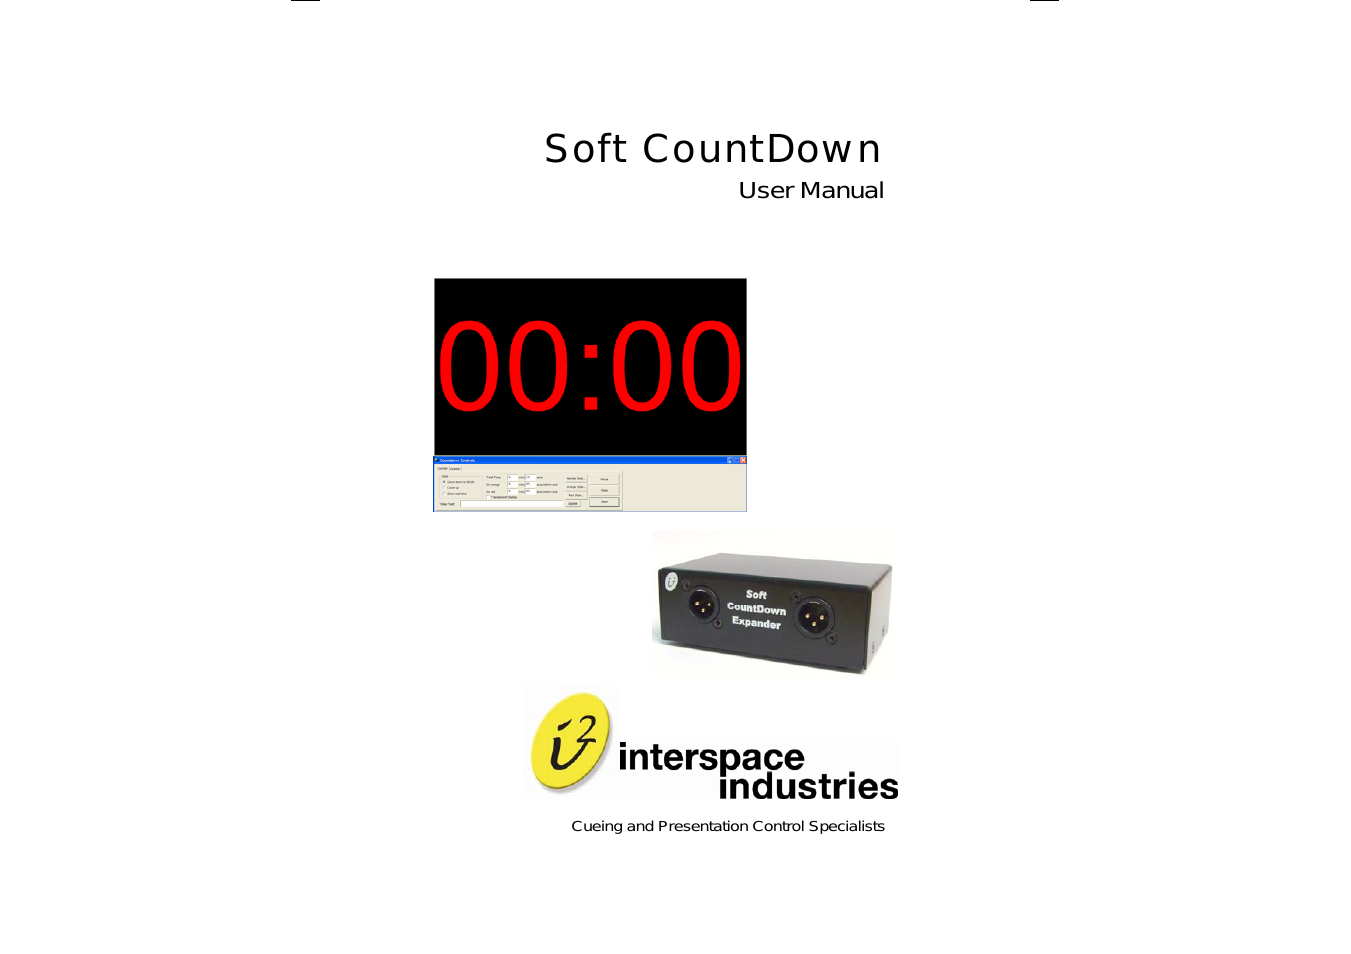 Soft Countdown